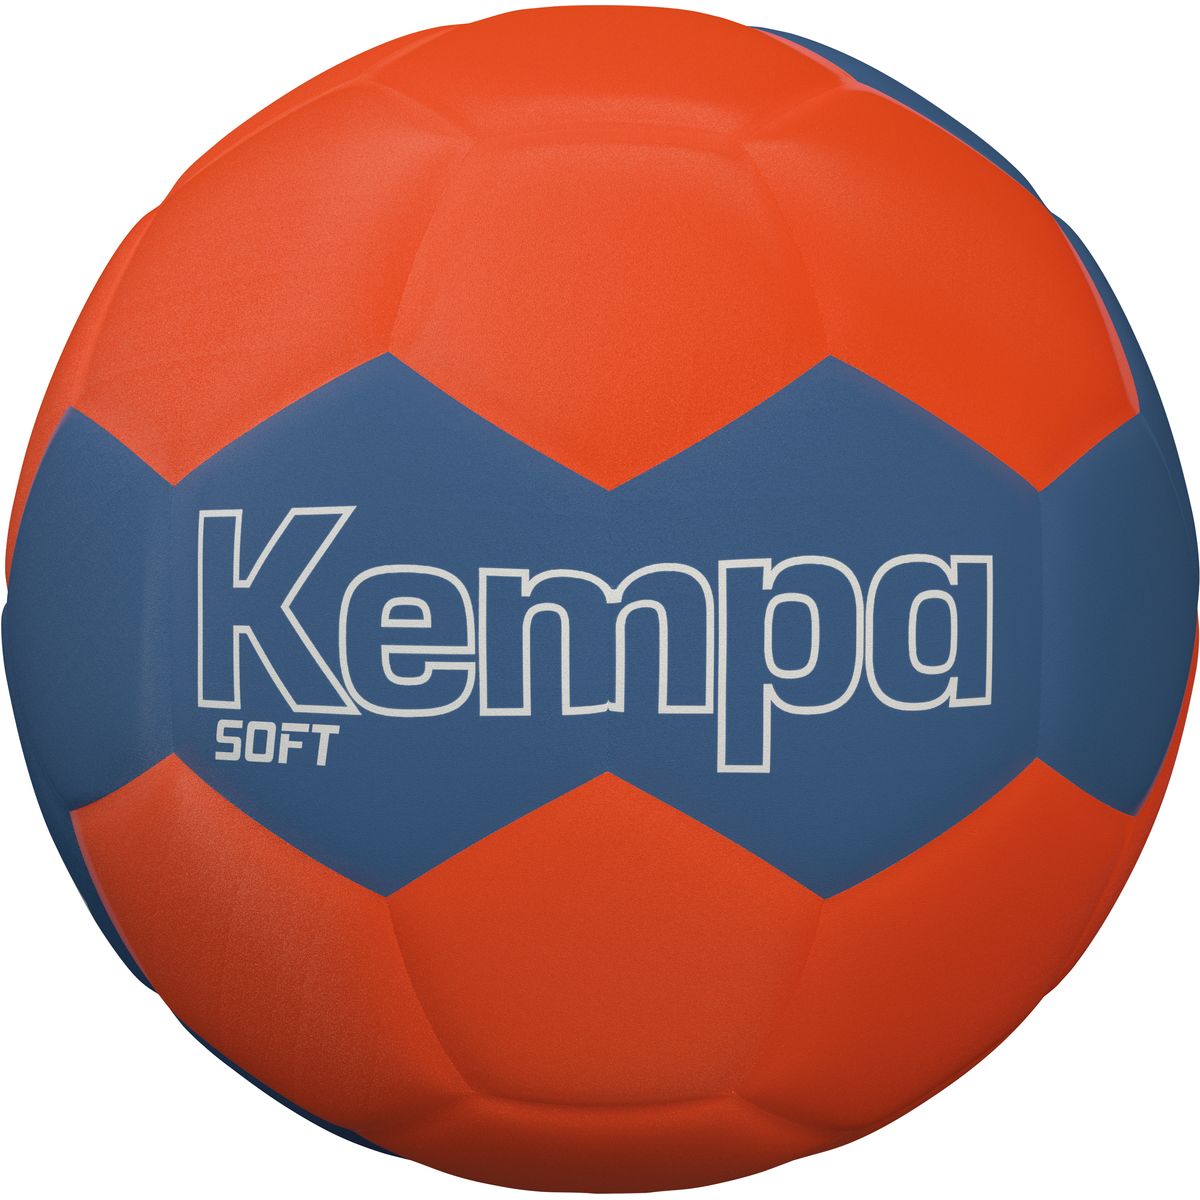 Kempa Soft Handball